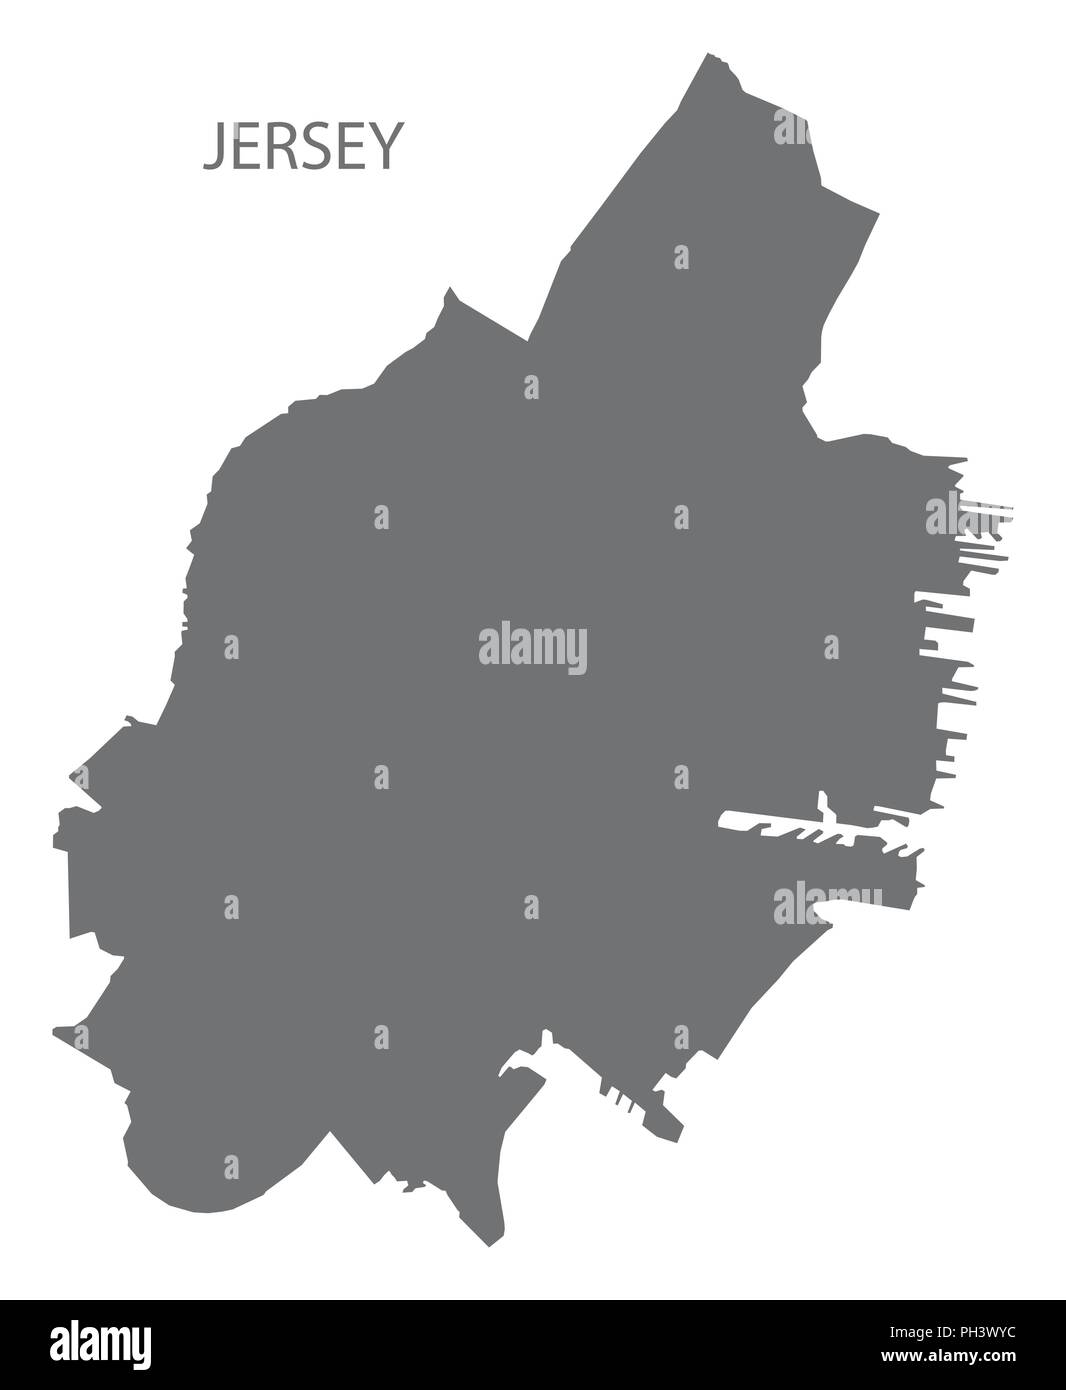 Jersey New Jersey City Karte grau Abbildung silhouette Form Stock Vektor